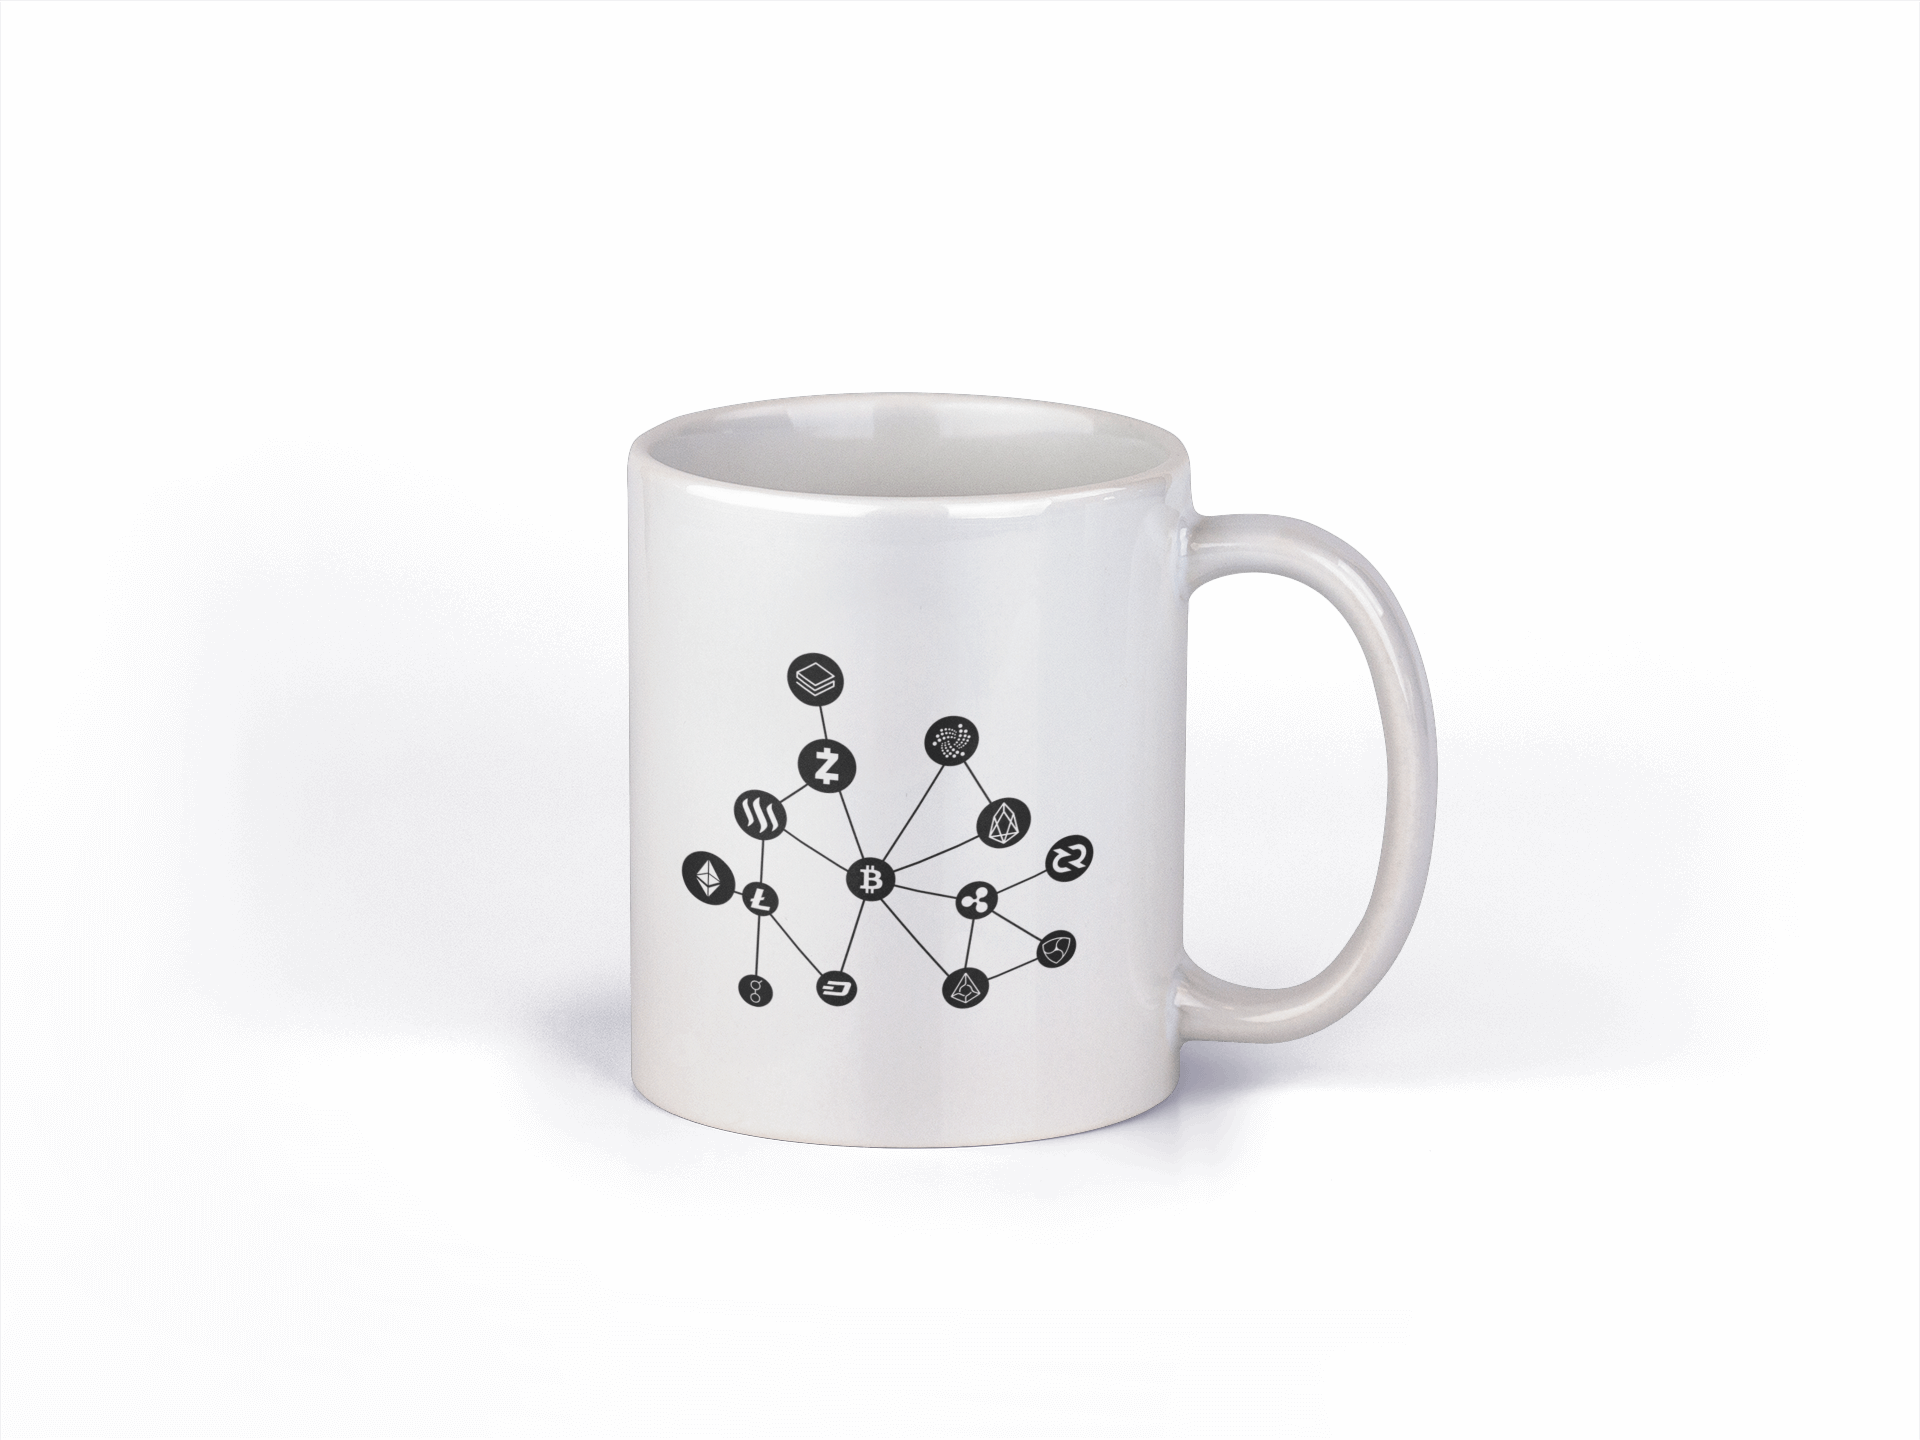 Ceramic mug with BITCOIN  logo